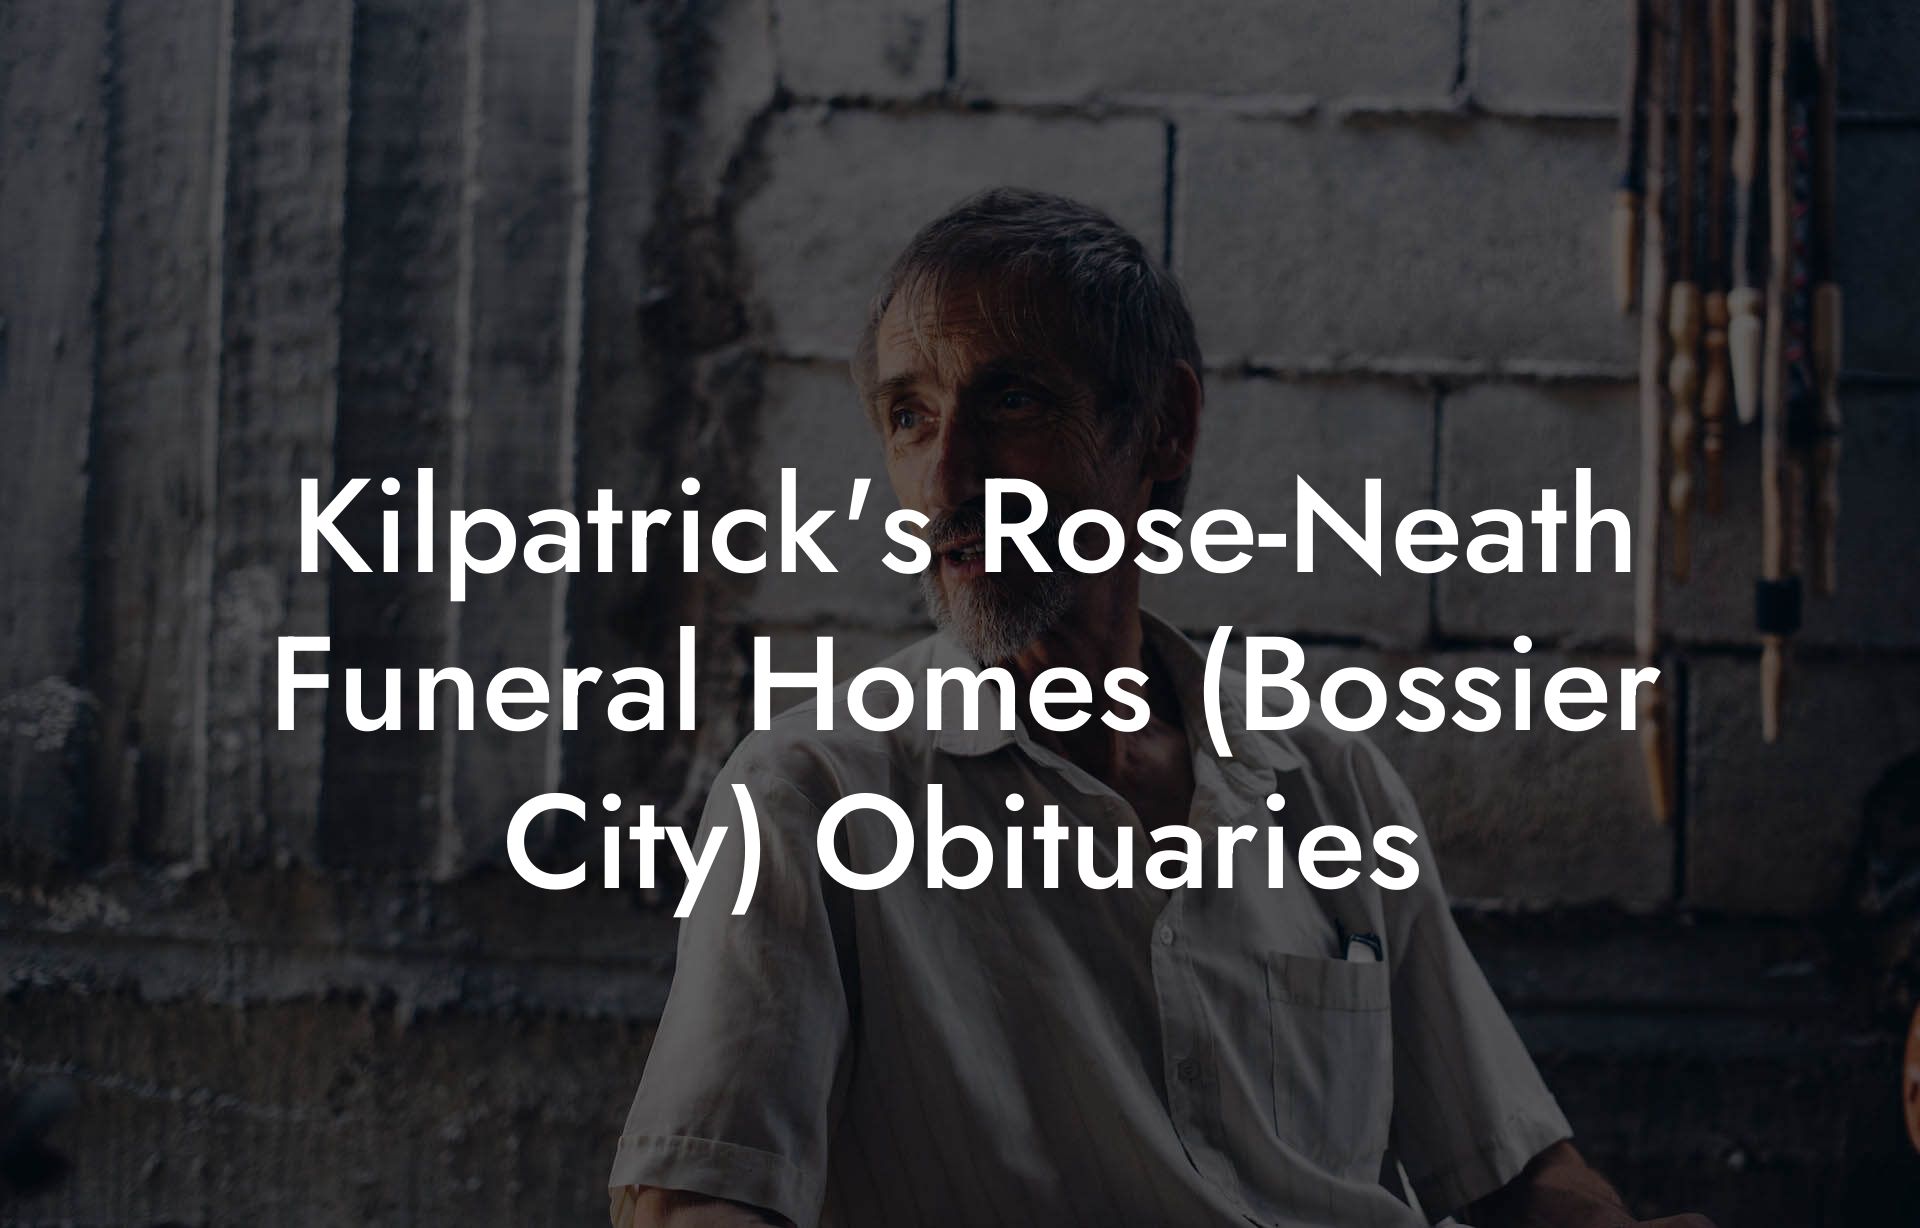 Kilpatrick's Rose-Neath Funeral Homes (Bossier City) Obituaries